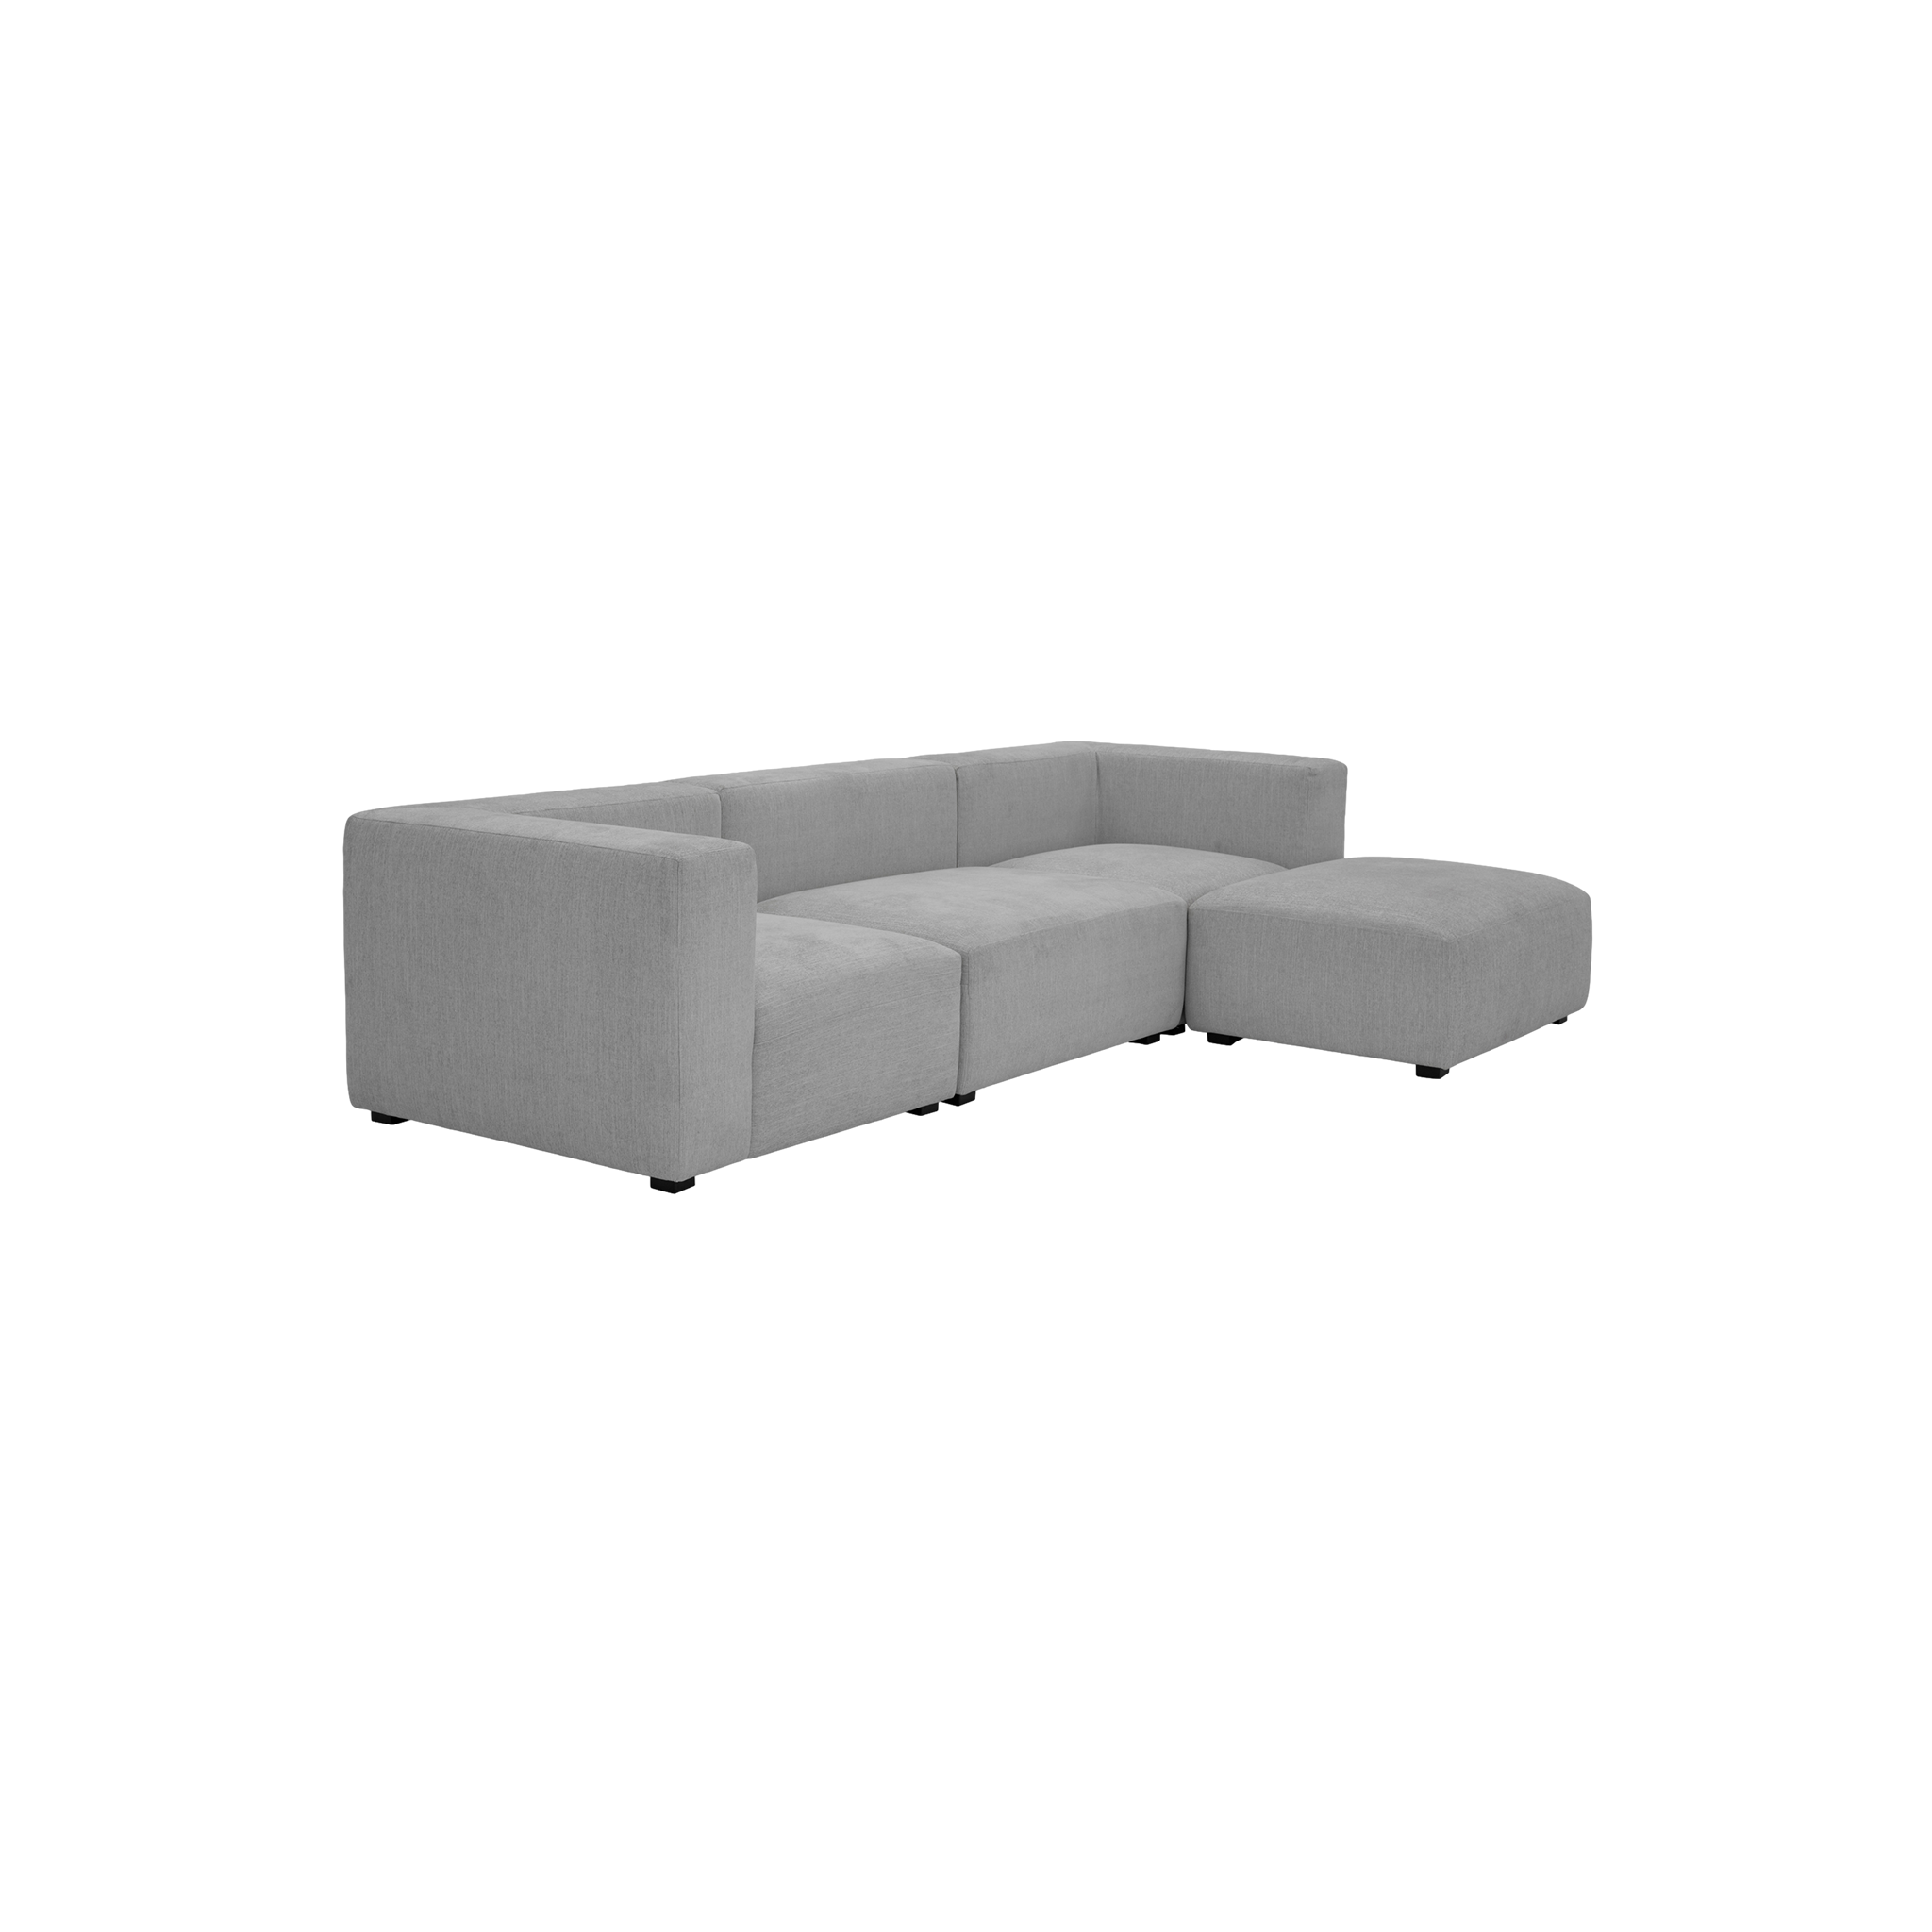 Romy Lounge Modular Sectional (Grey/Cream)